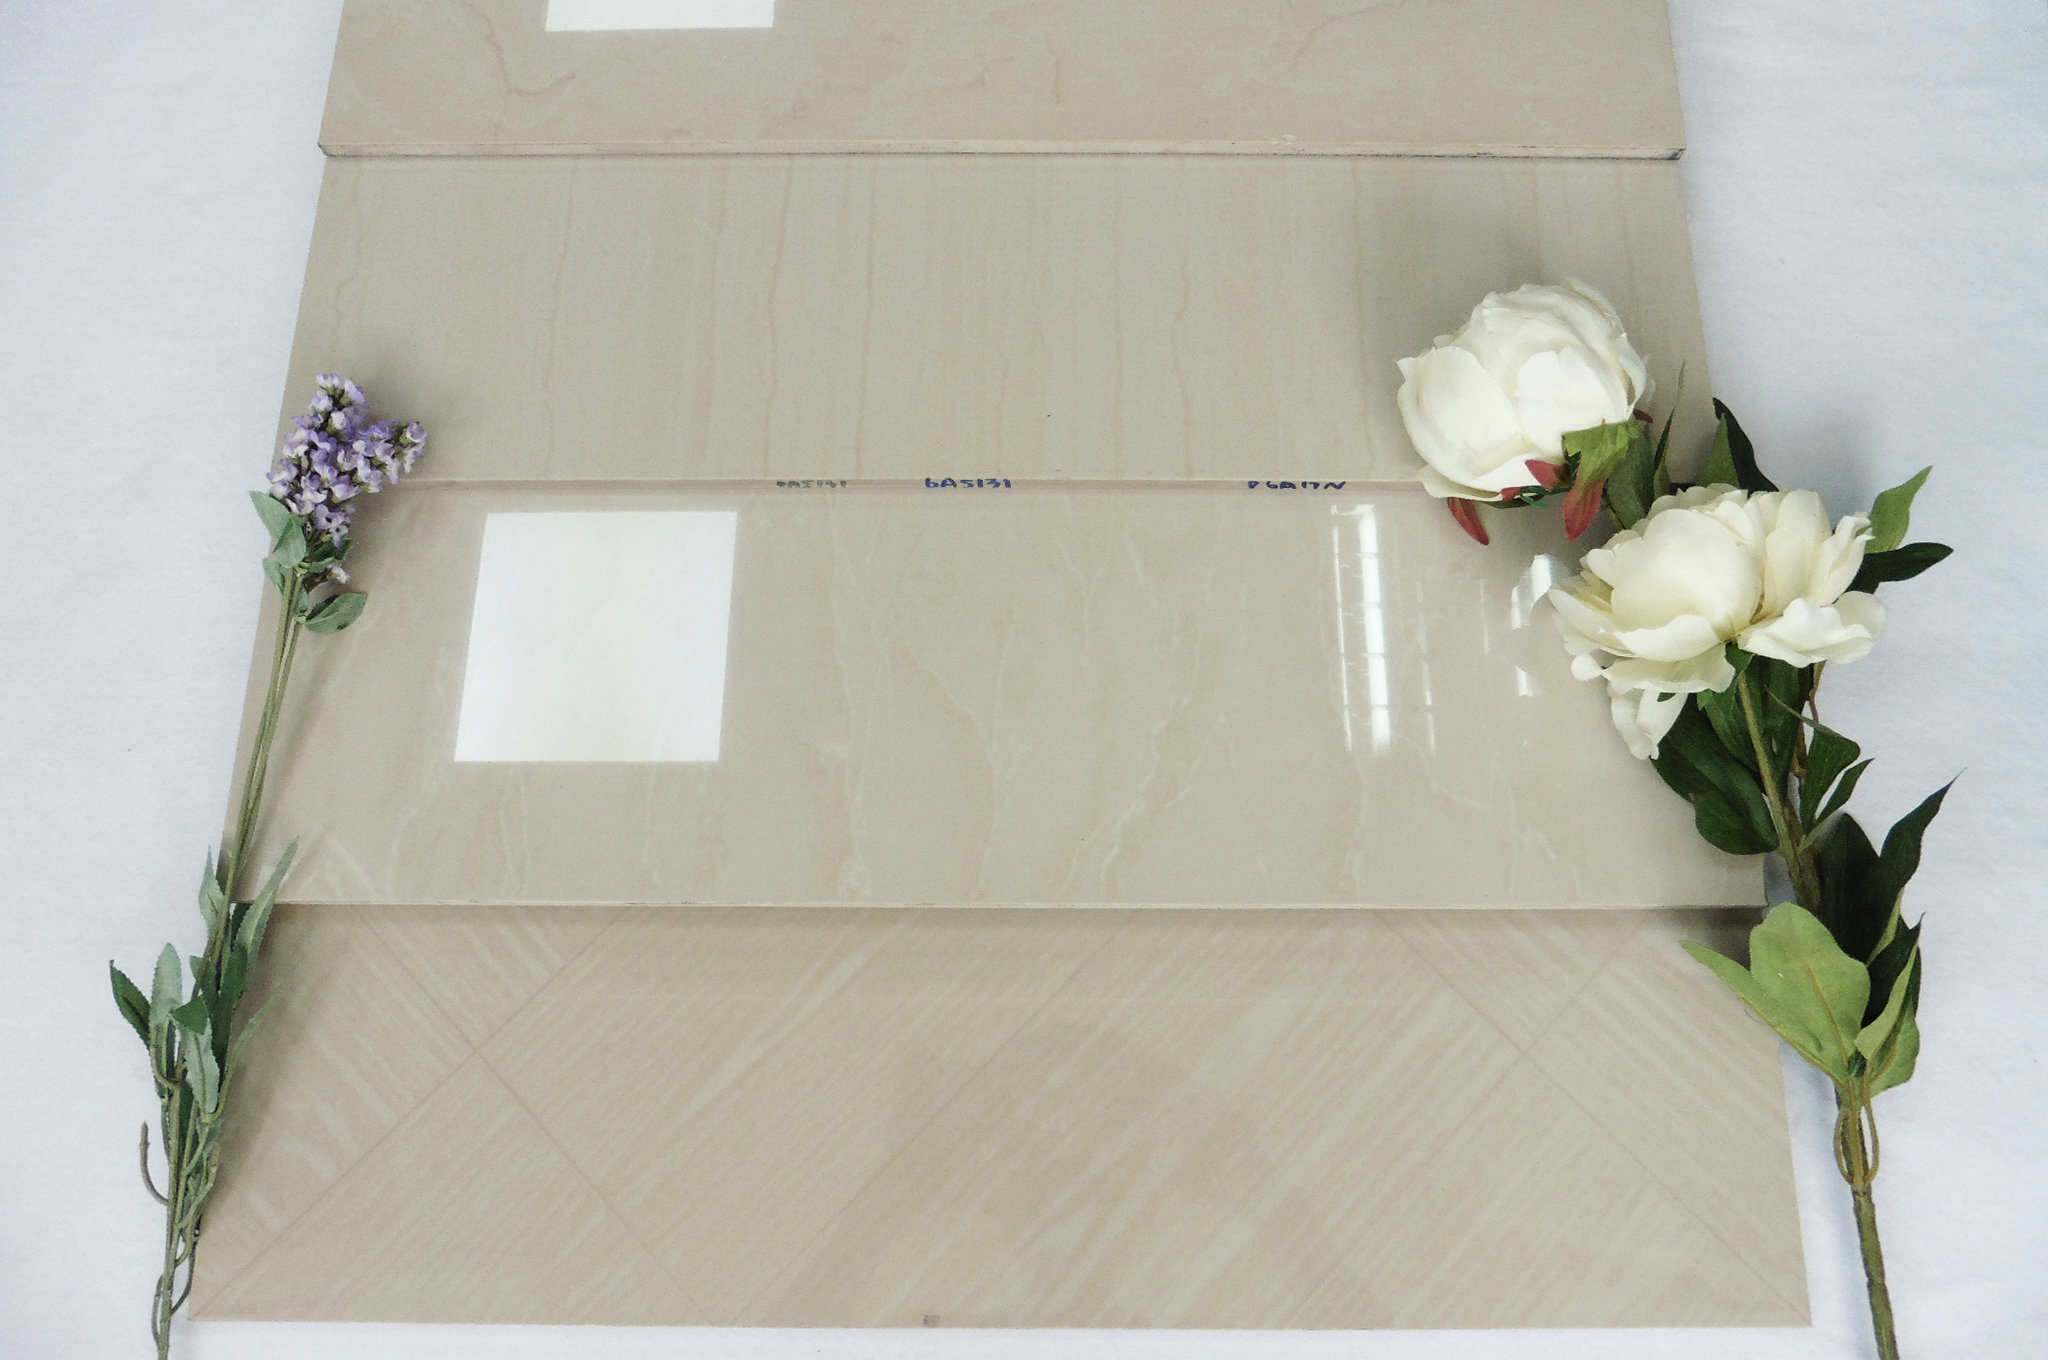 China New Design Floor Tiles Crystal White Porcelanato Polished Tile 60X60